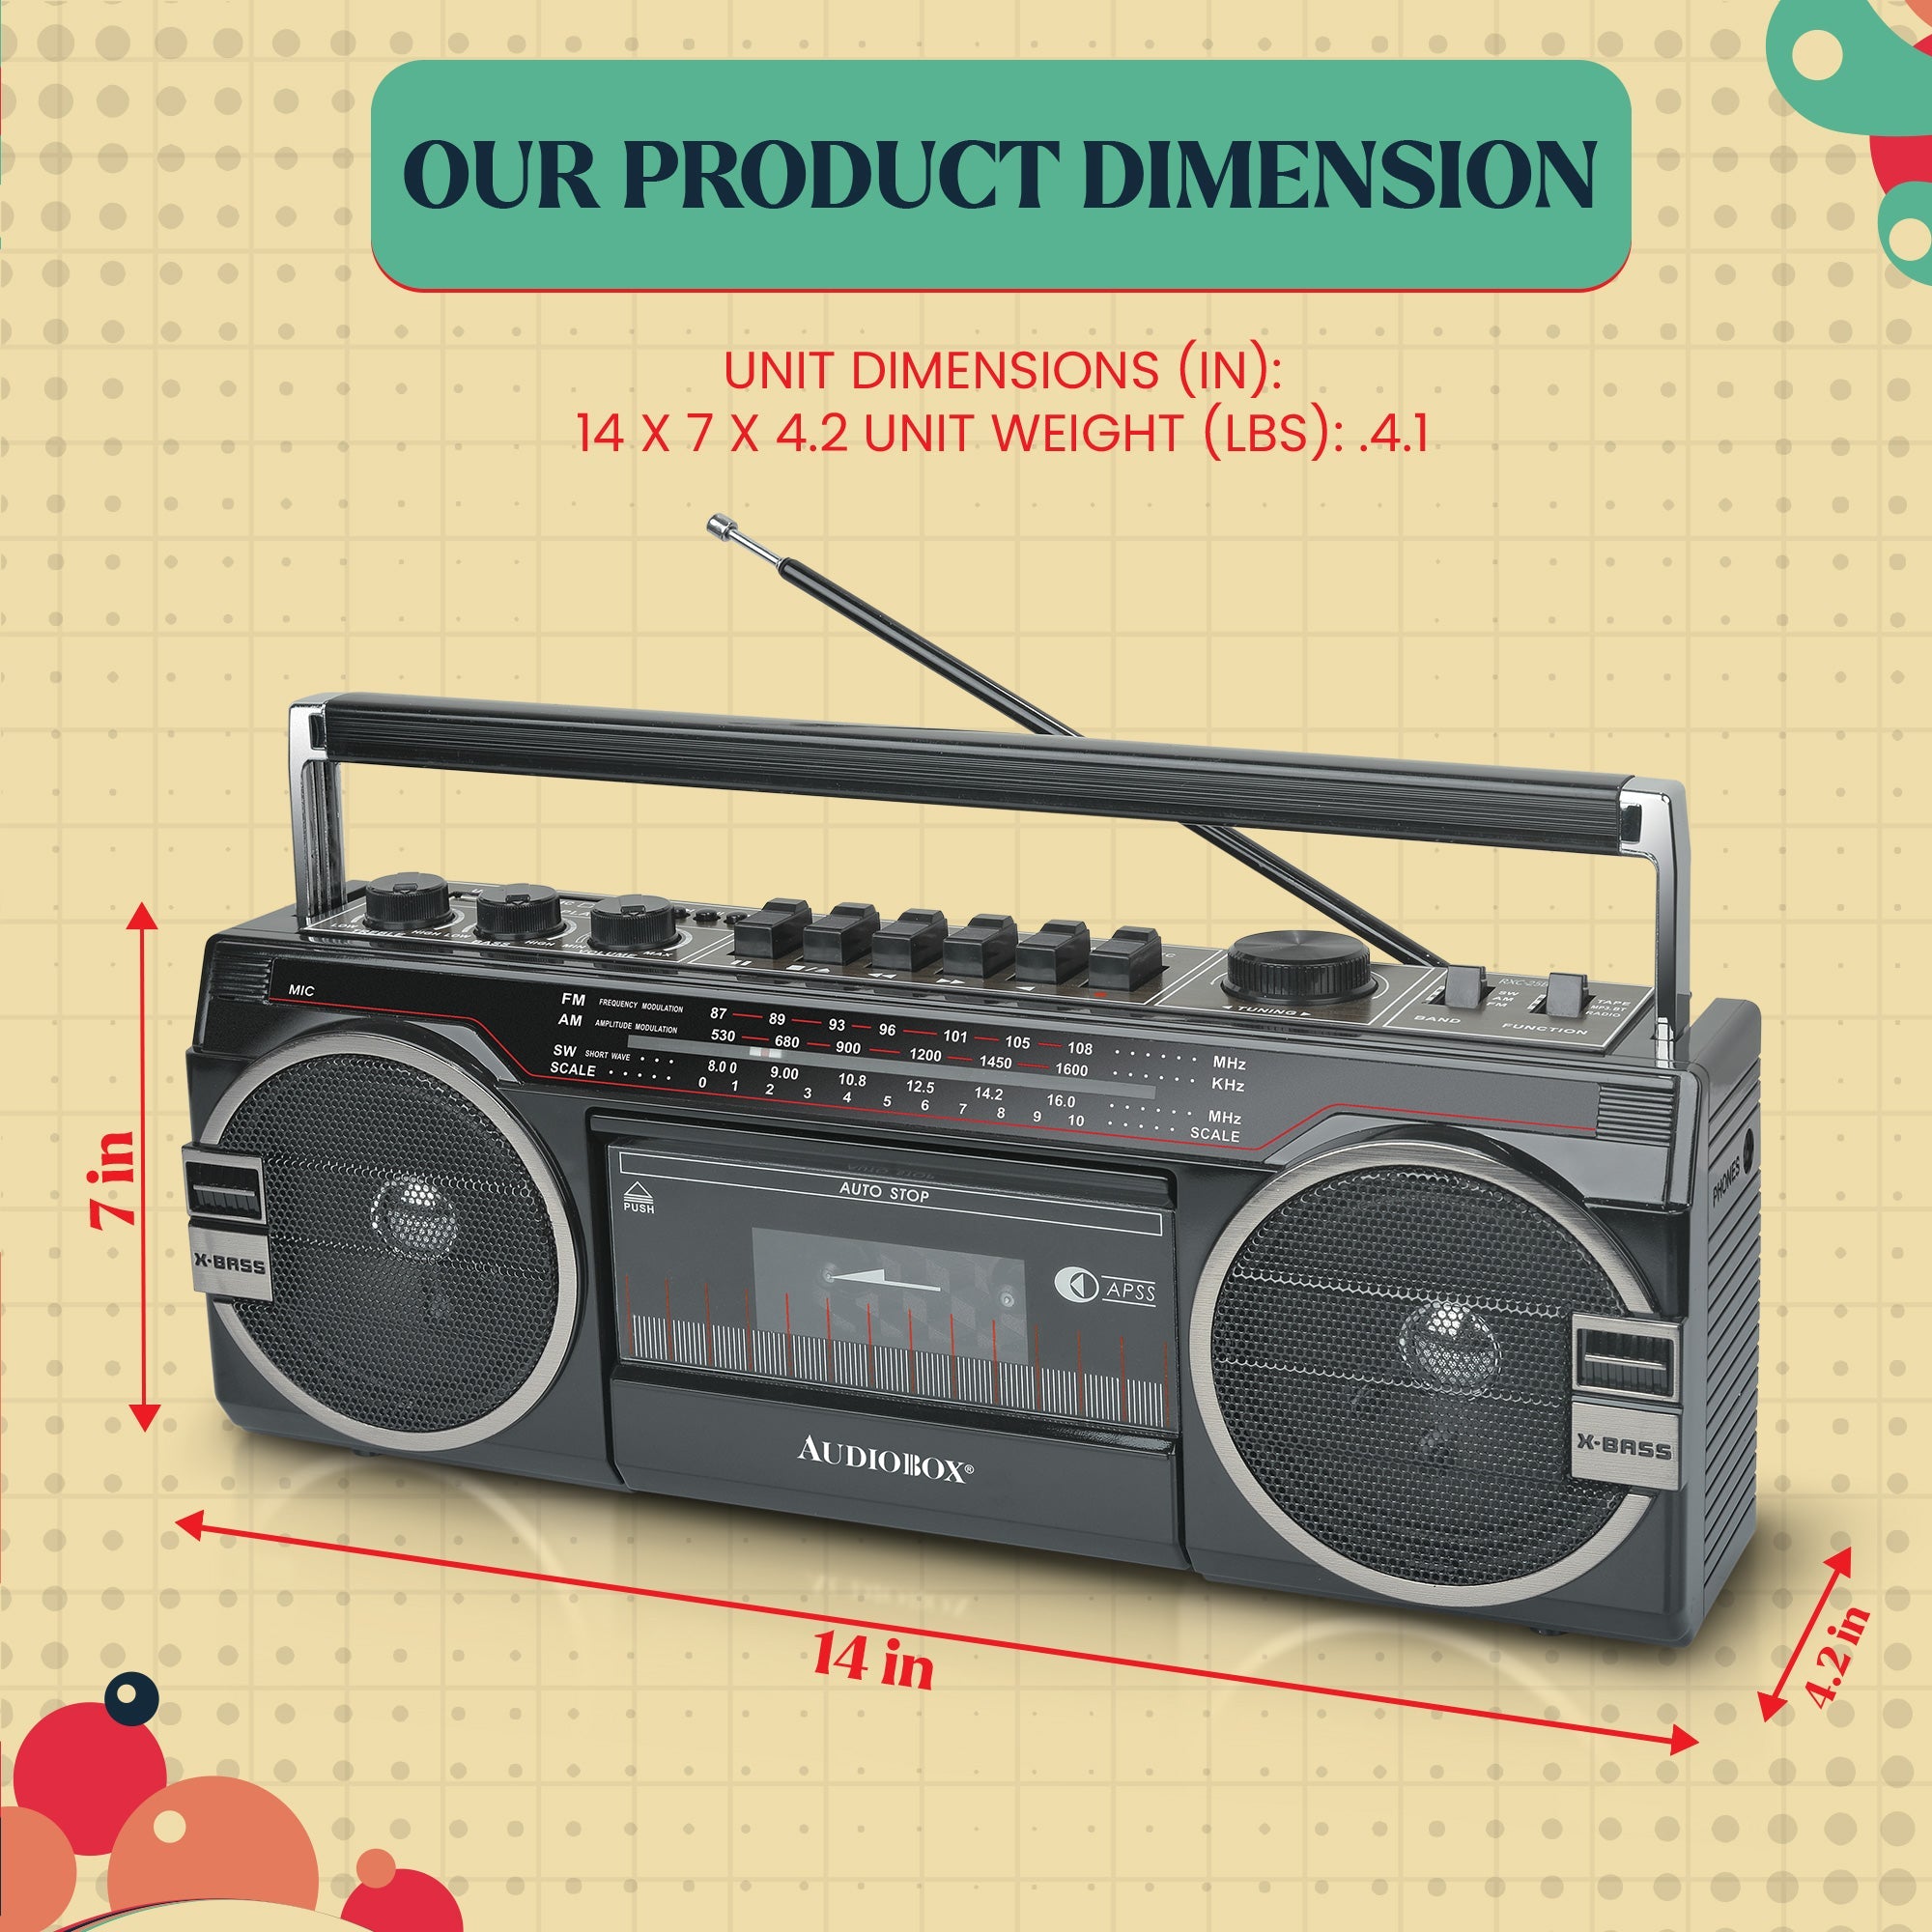 Audiobox RXC-25BT Cassette Player &amp; Recorder with AM/FM/SW Radio - Top ElectrosSpeakersRXC-25BT BLACK810059430471